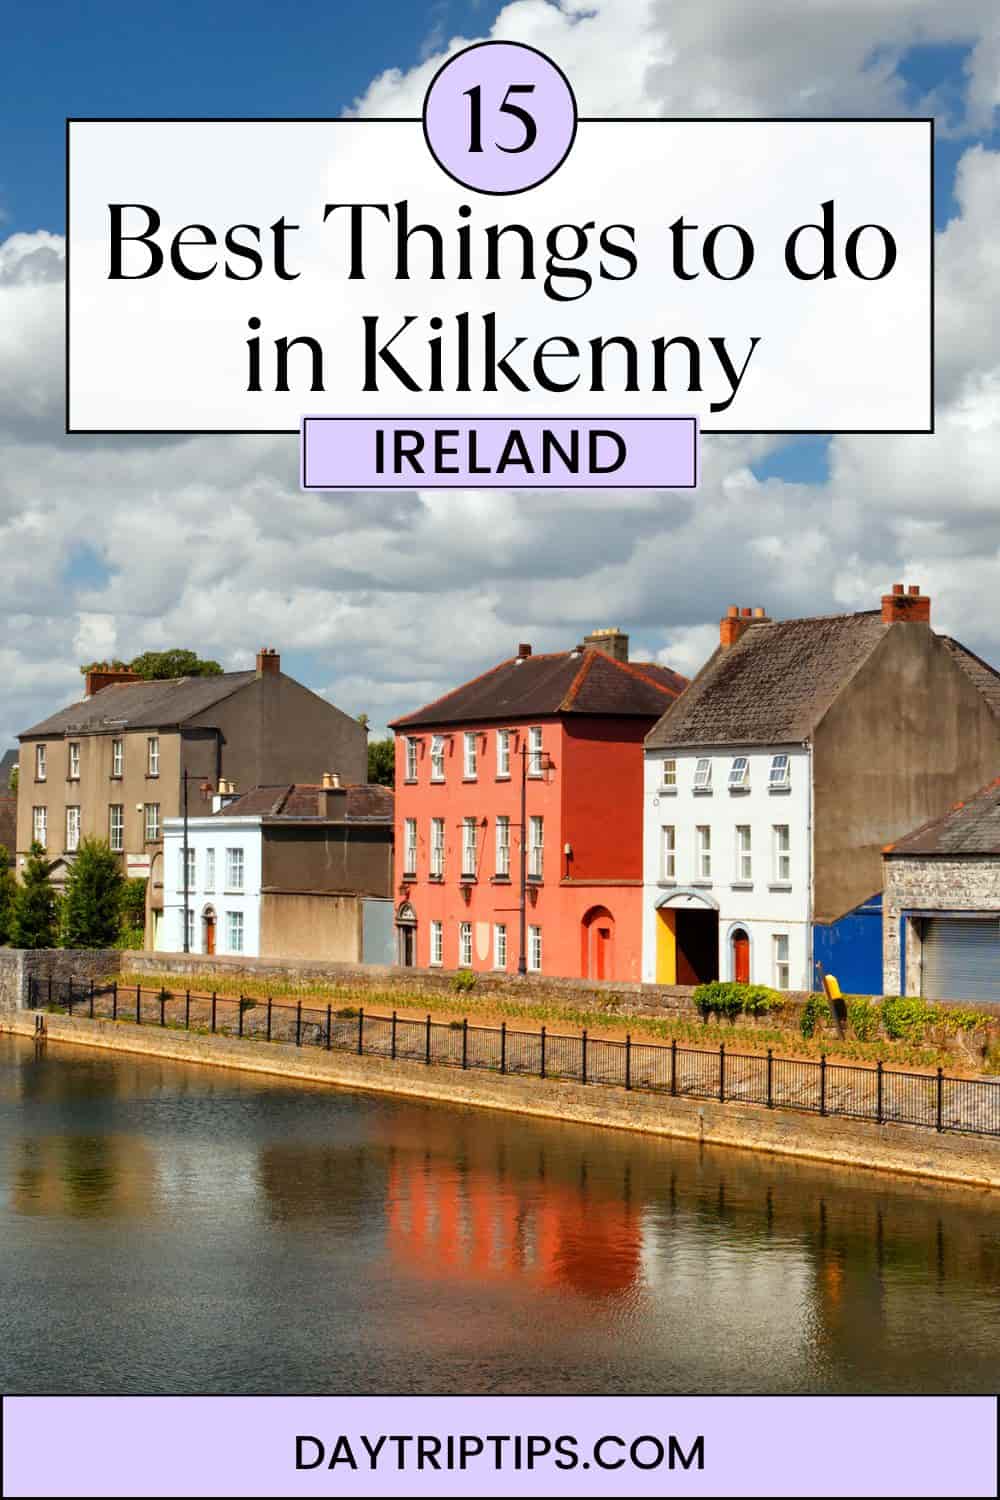 Best Things to do in Kilkenny Ireland